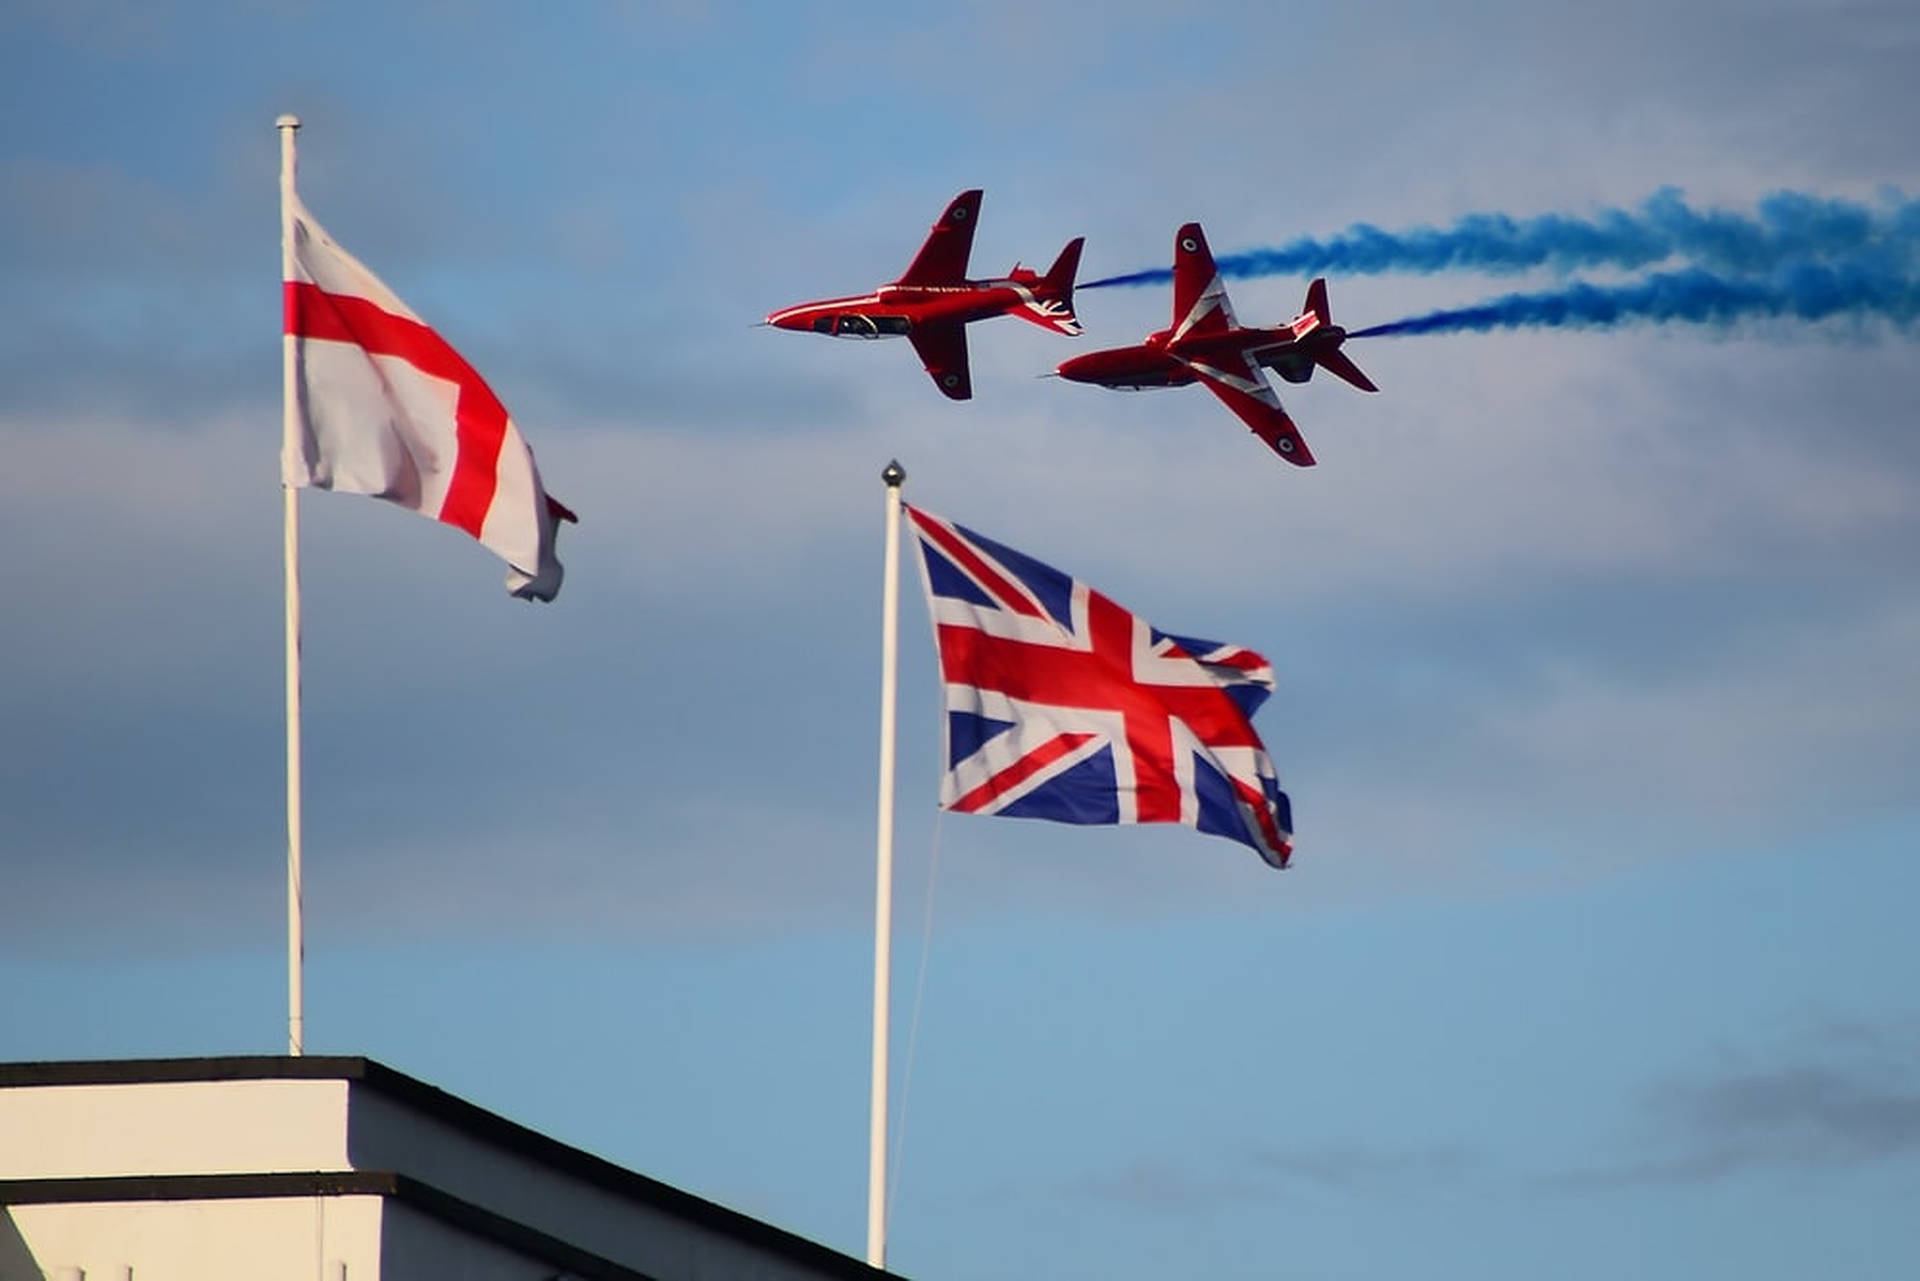 Englandflagge Mit Düsenflugzeug Wallpaper